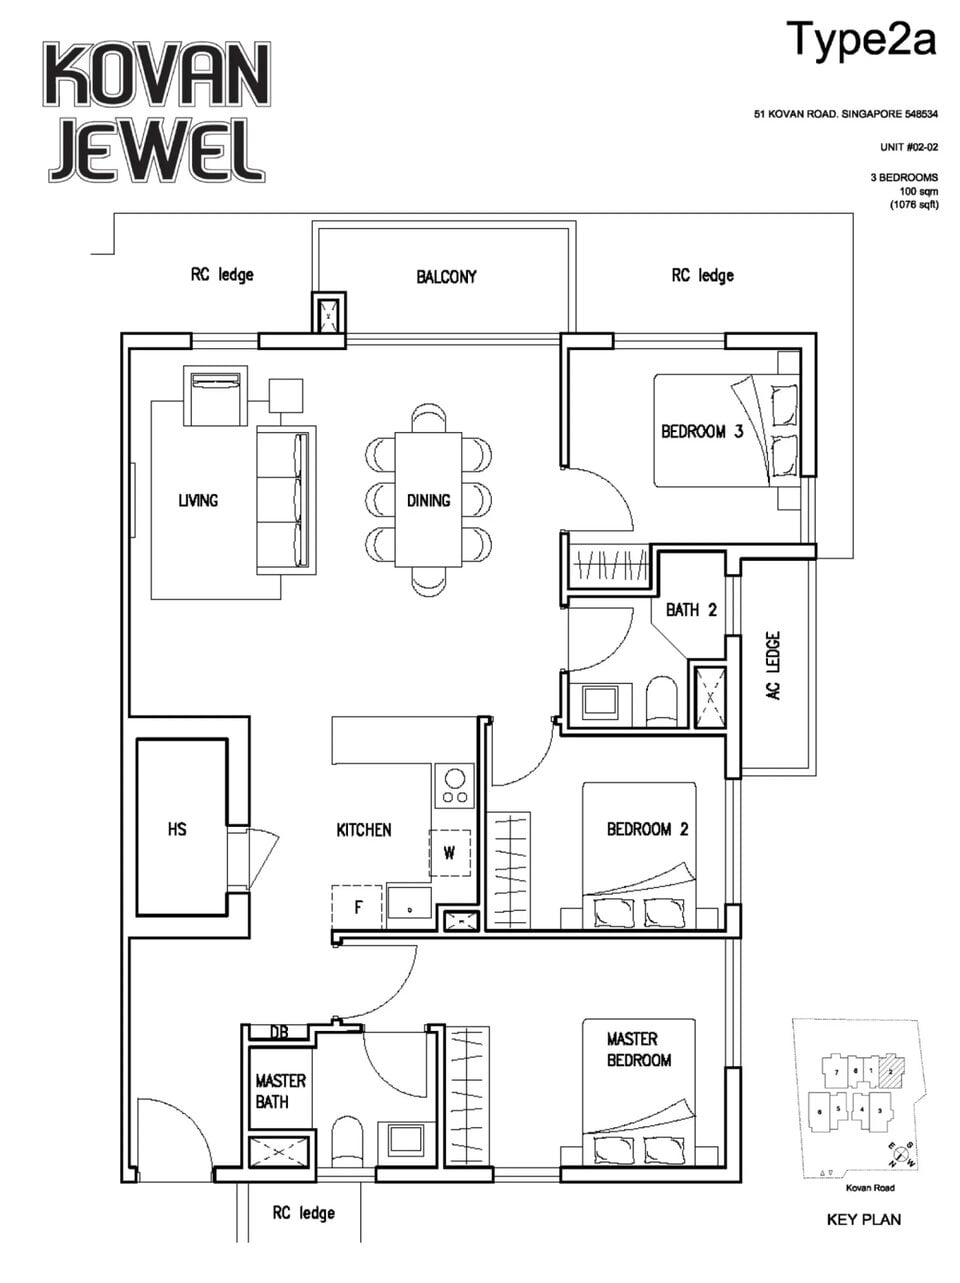 fp-kovan-jewel-family-2a-floor-plan.jpg